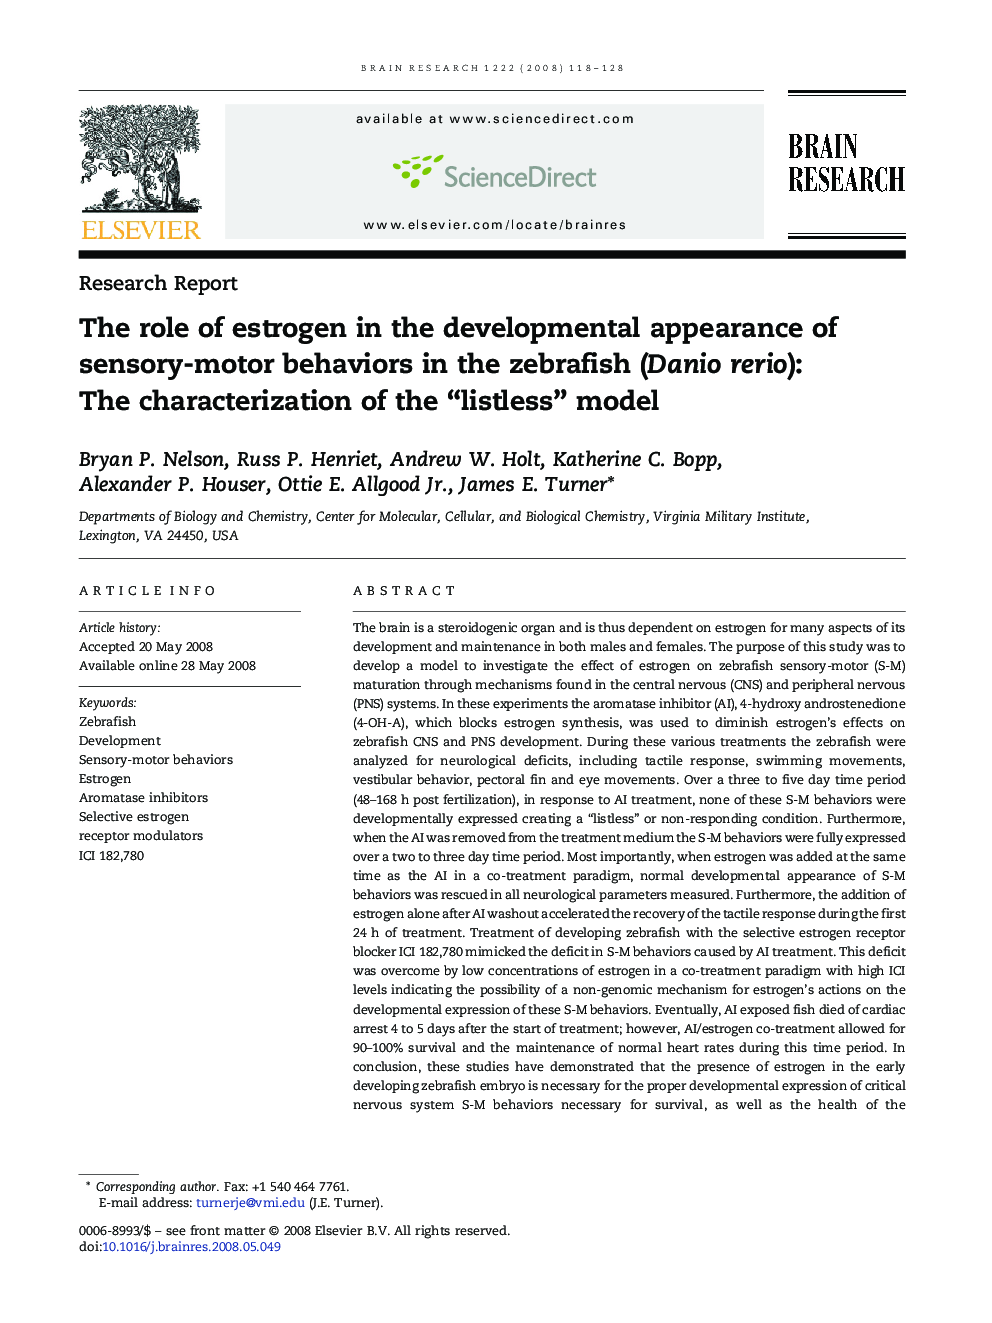 The role of estrogen in the developmental appearance of sensory-motor behaviors in the zebrafish (Danio rerio): The characterization of the “listless” model